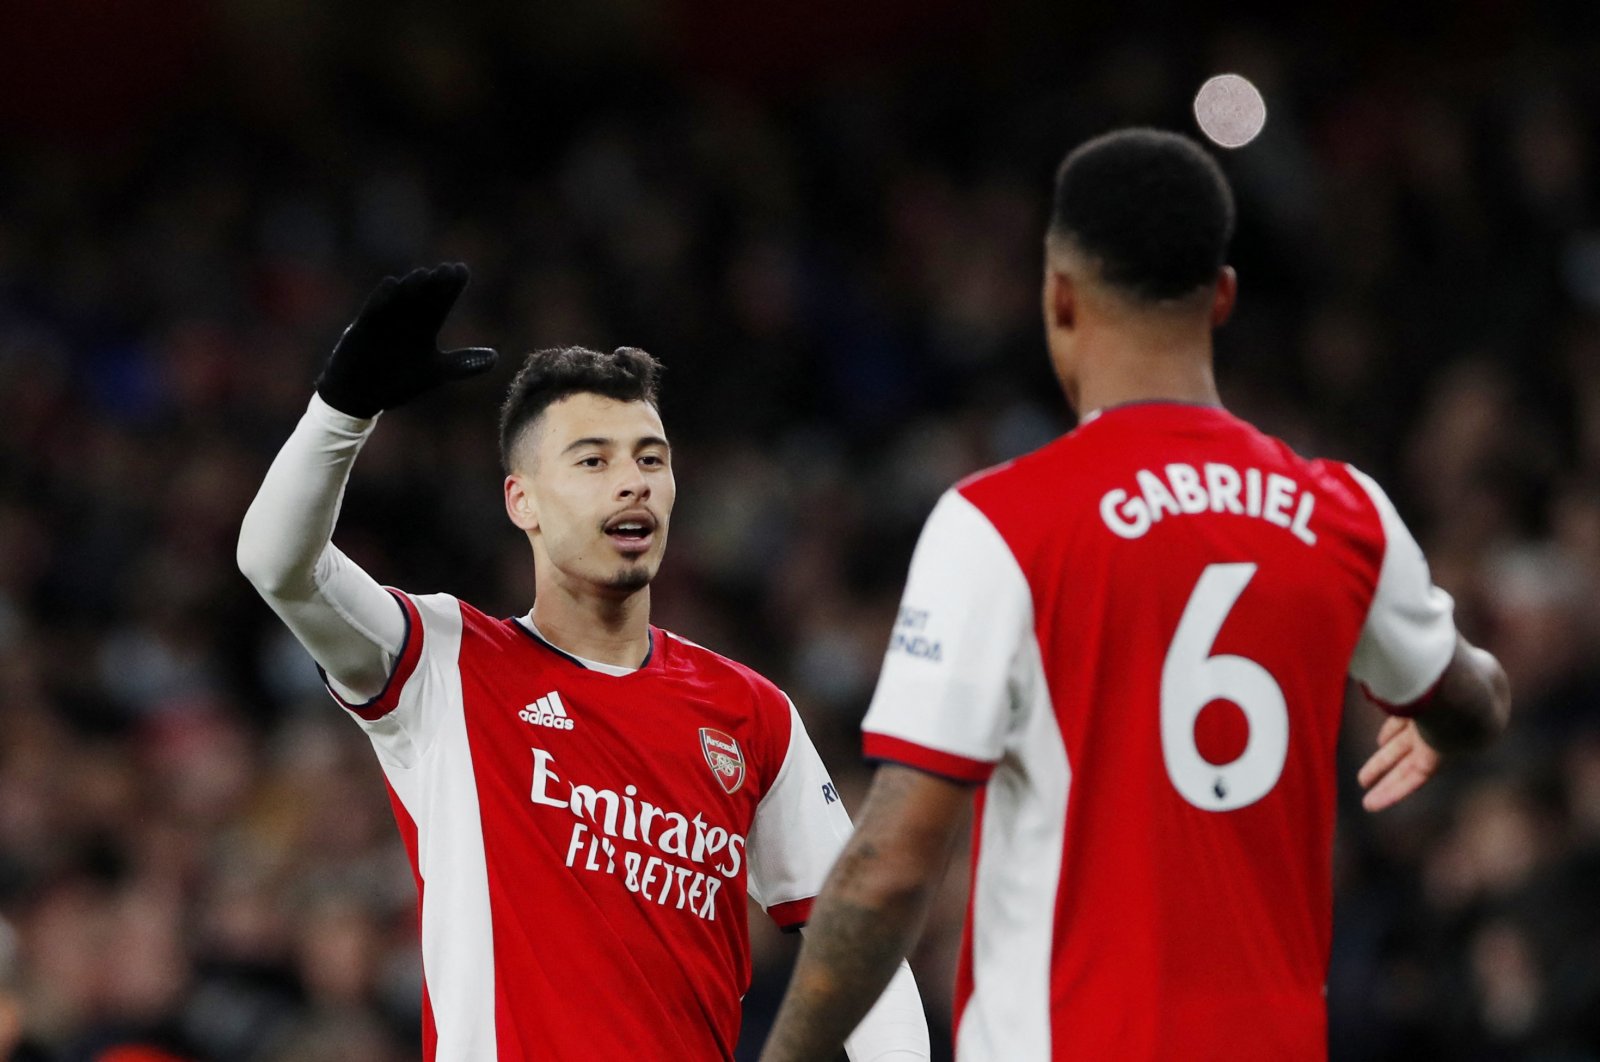 Arsenal&#039;s Gabriel Martinelli celebrates with teammate Gabriel after scoring a goal in a Premier League match against West Ham, London, England, Dec. 15, 2021. (Reuters Photo)